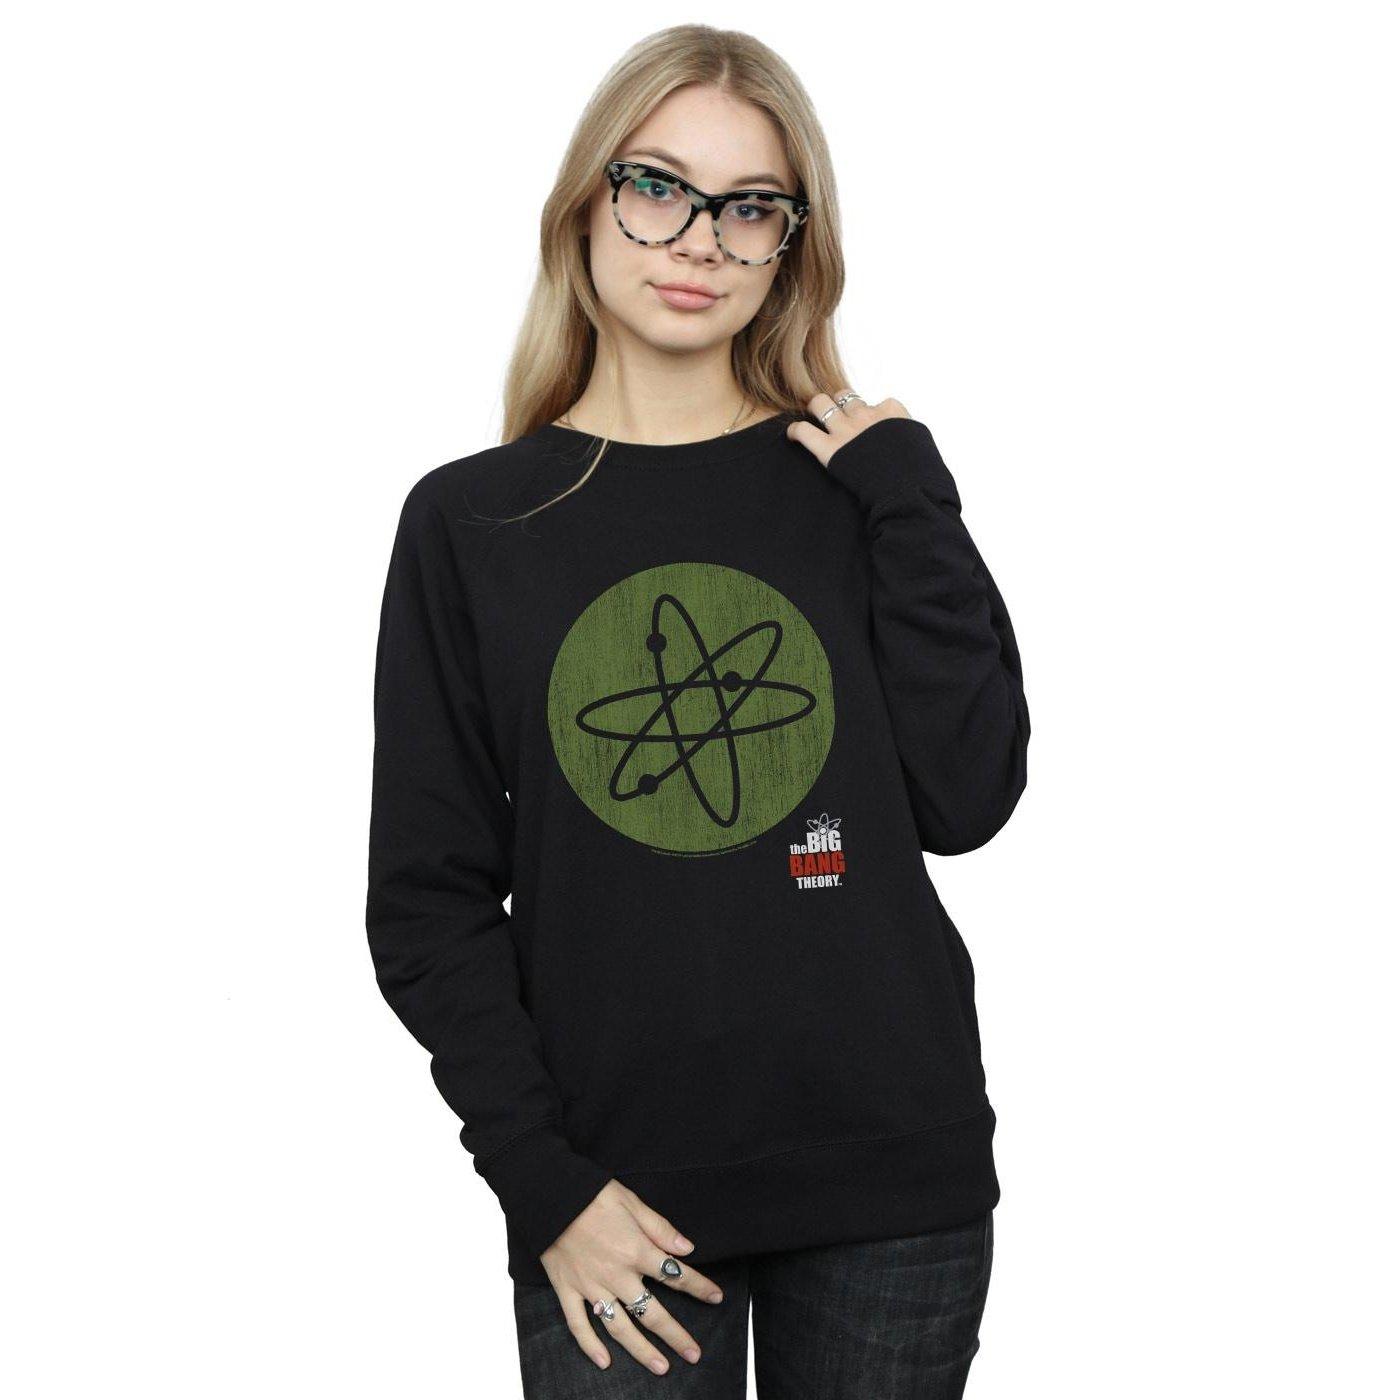 The Big Bang Theory  Big Bang Icon Sweatshirt 